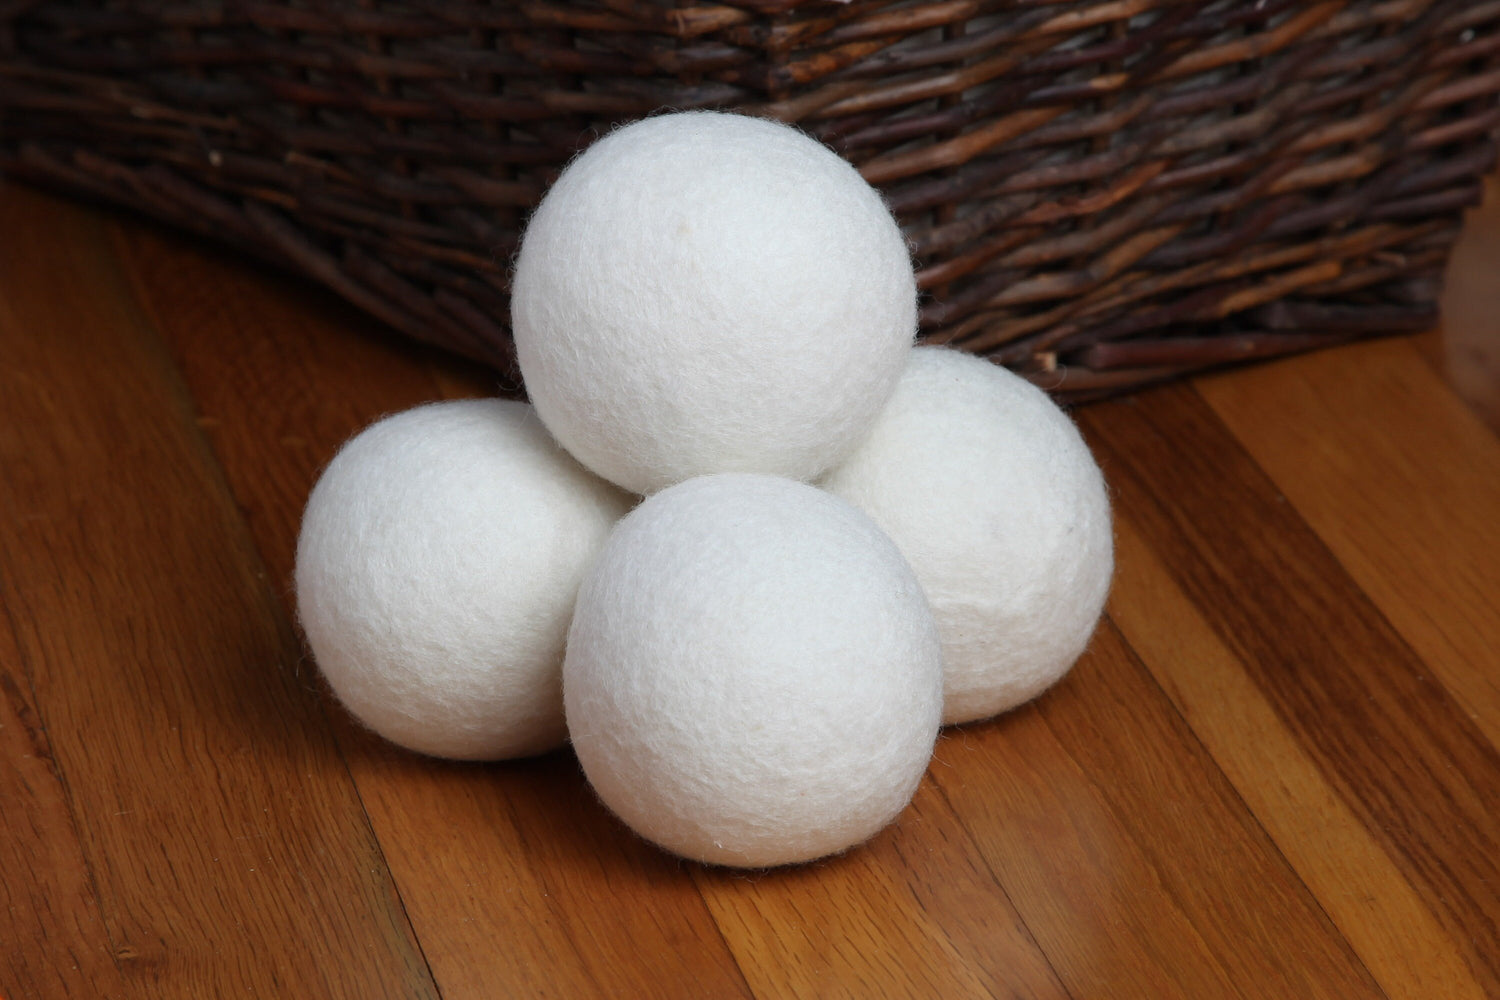 Wholesale Cotton Balls - Cotton Balls in Bulk